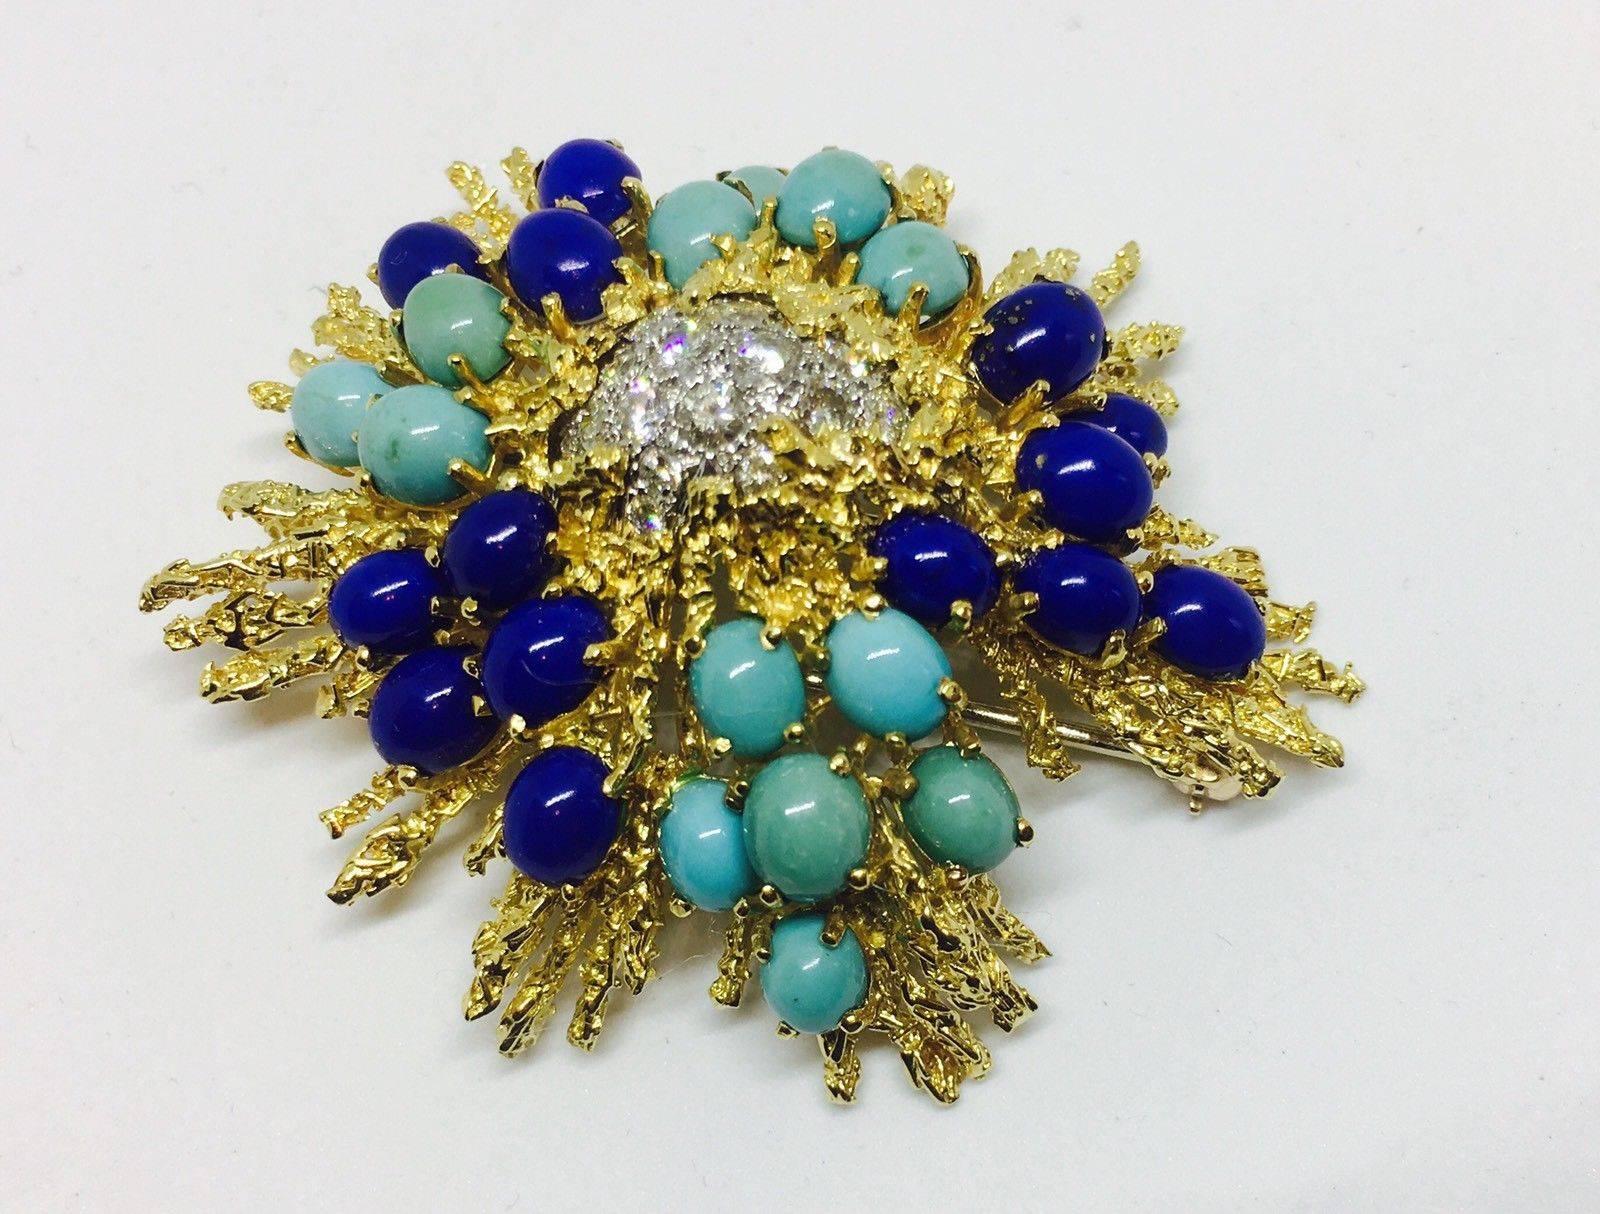 Retro George Schuler 18 Karat Gold Lapis Turquoise Diamond Brooch Pin Necklace Pendant For Sale